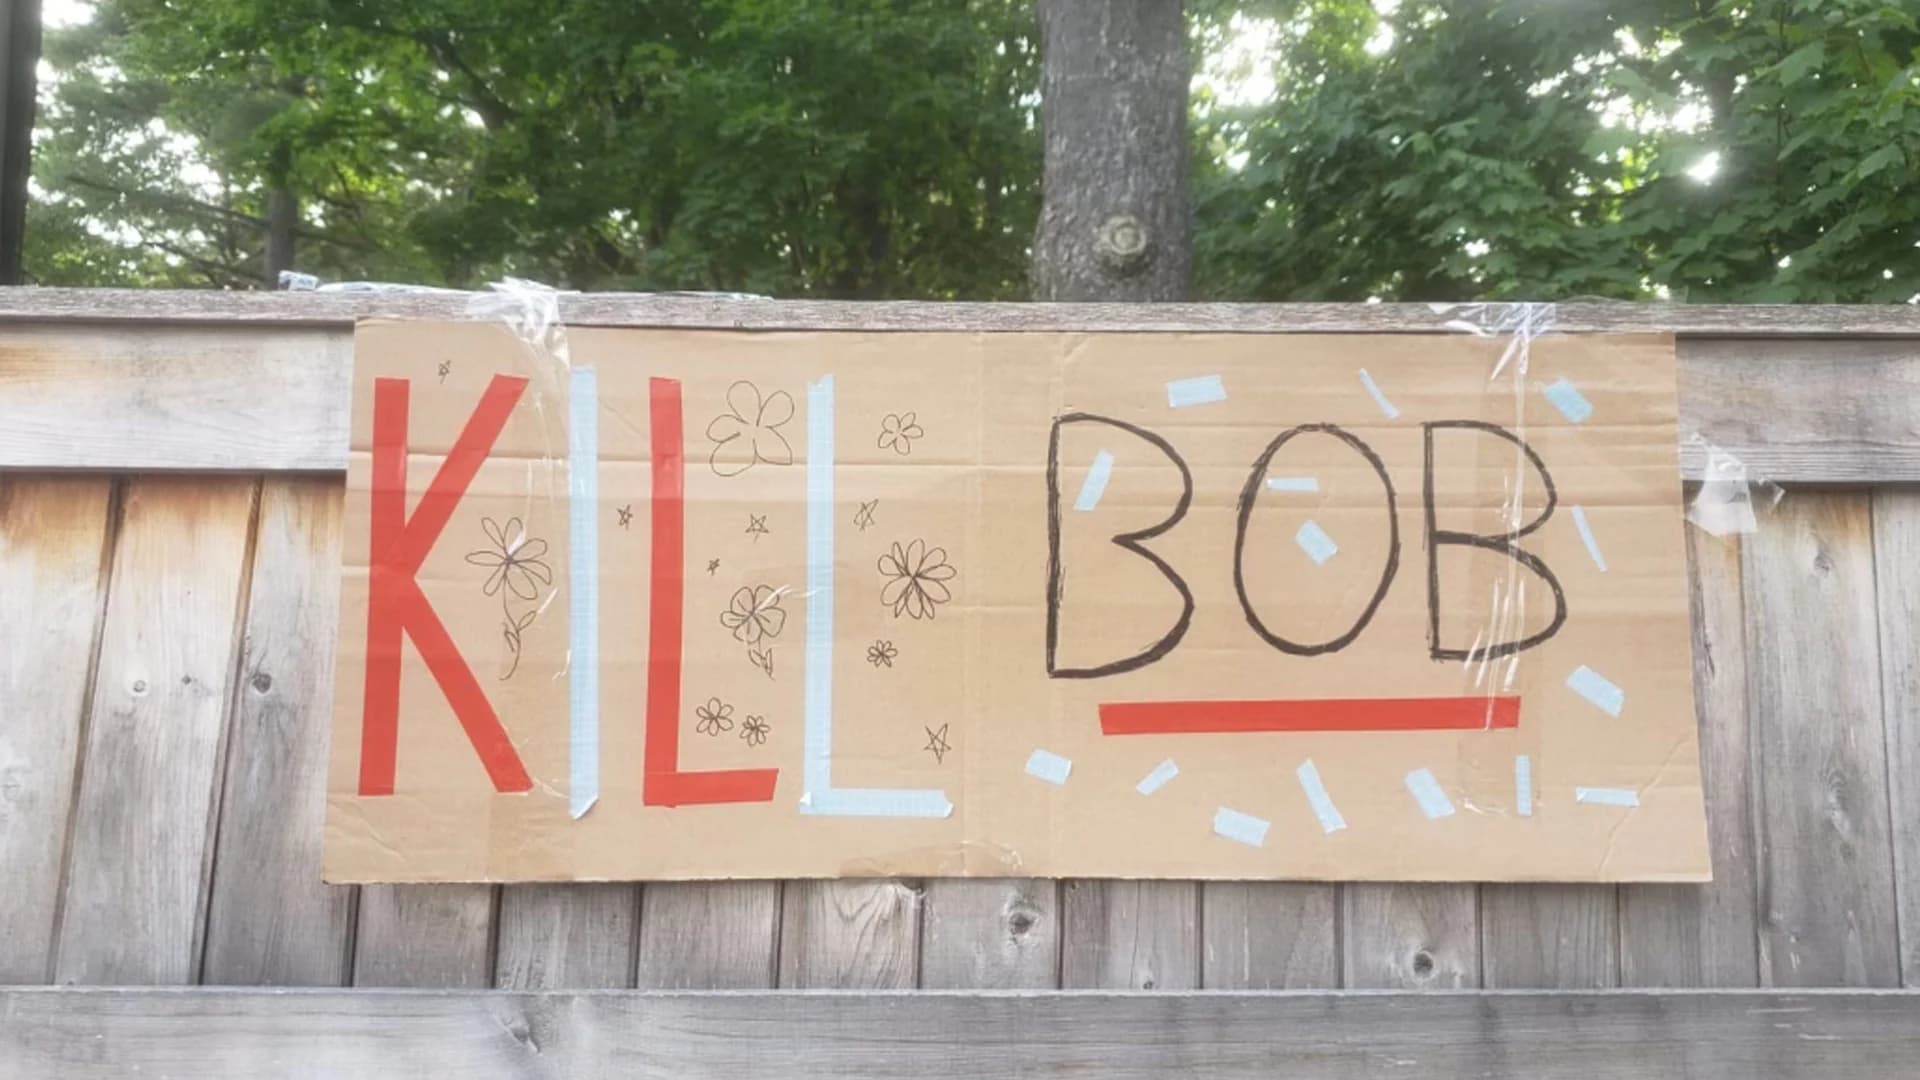 Police: 'KILL BOB' sign found outside Republican HQ not directed towards Bob Stefanowski